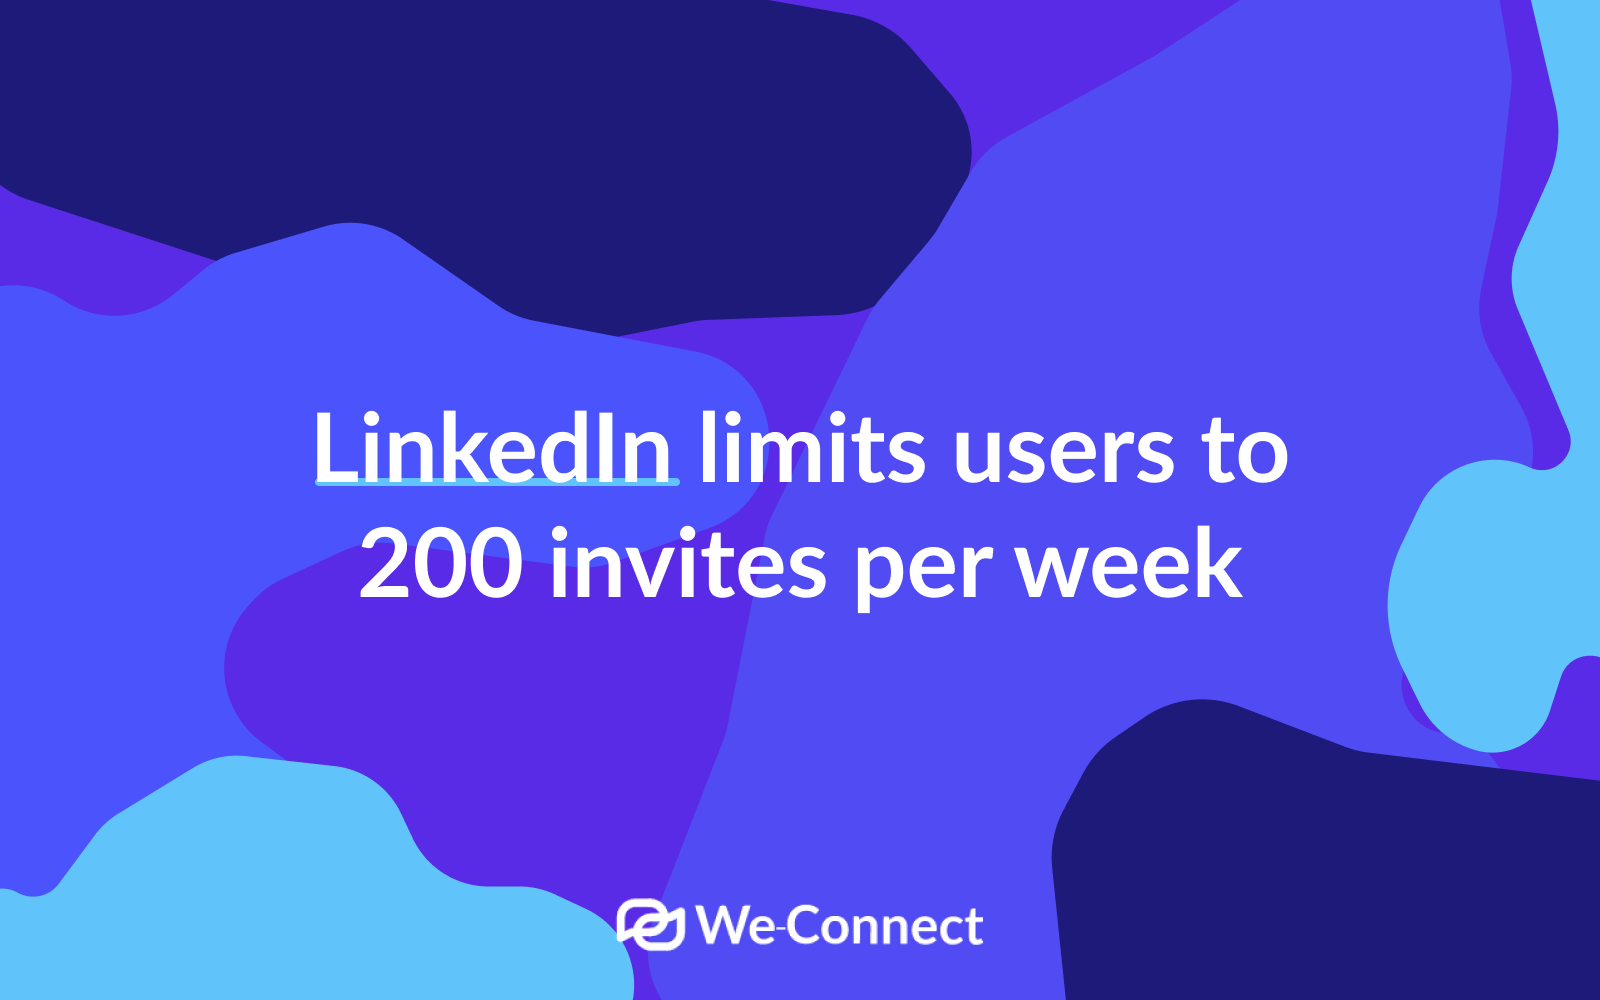 LinkedIn limits users to 200 invites per week